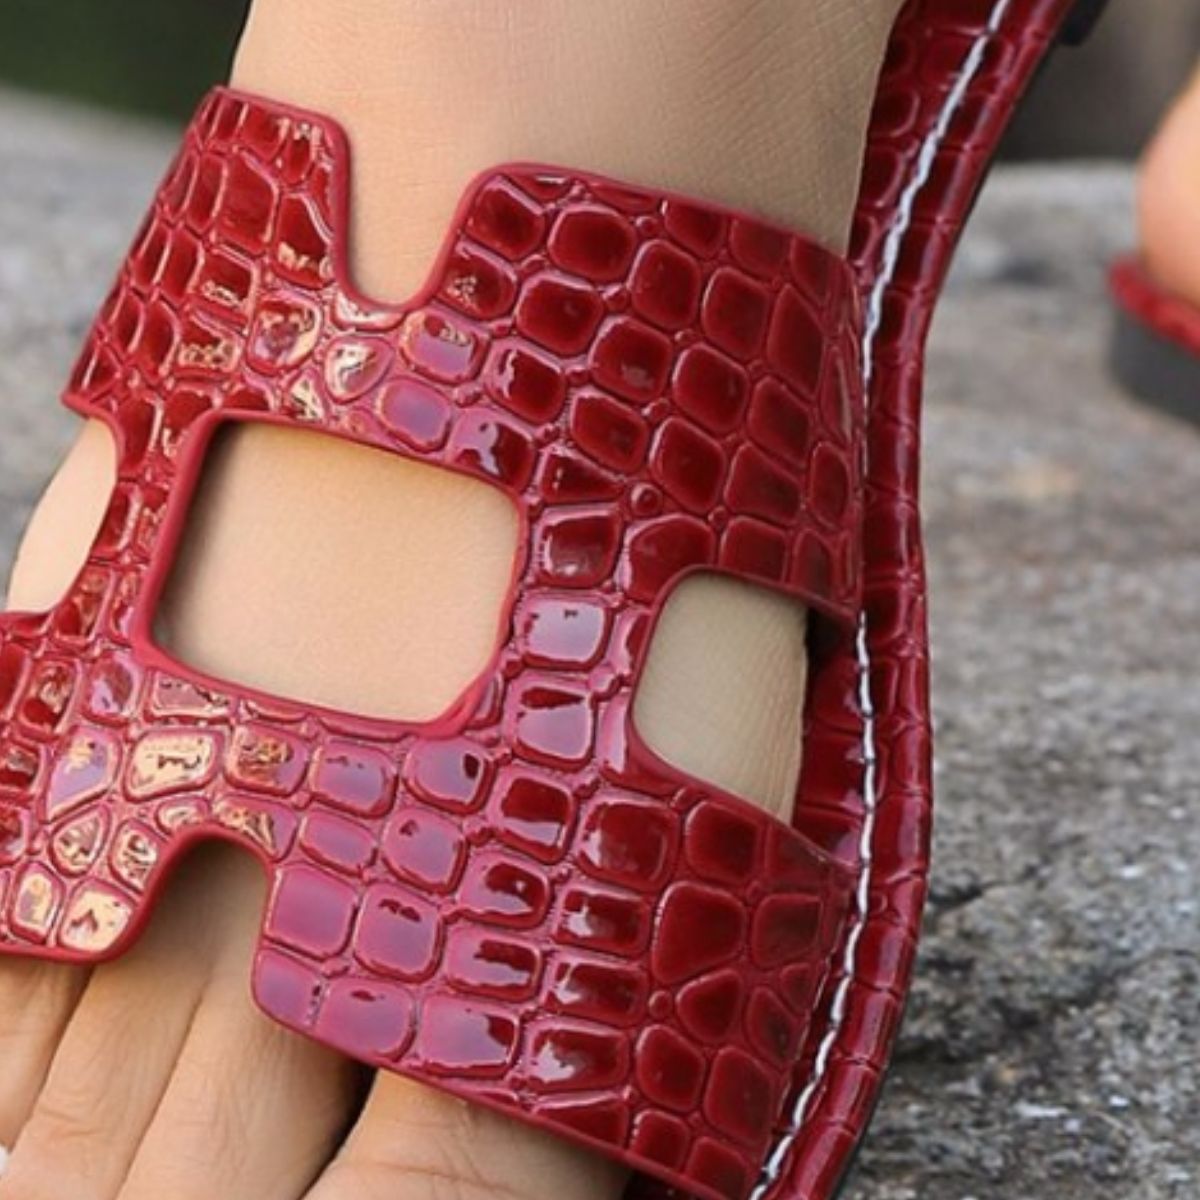 Crocodile Pattern Open-Toe PU Leather Sandals